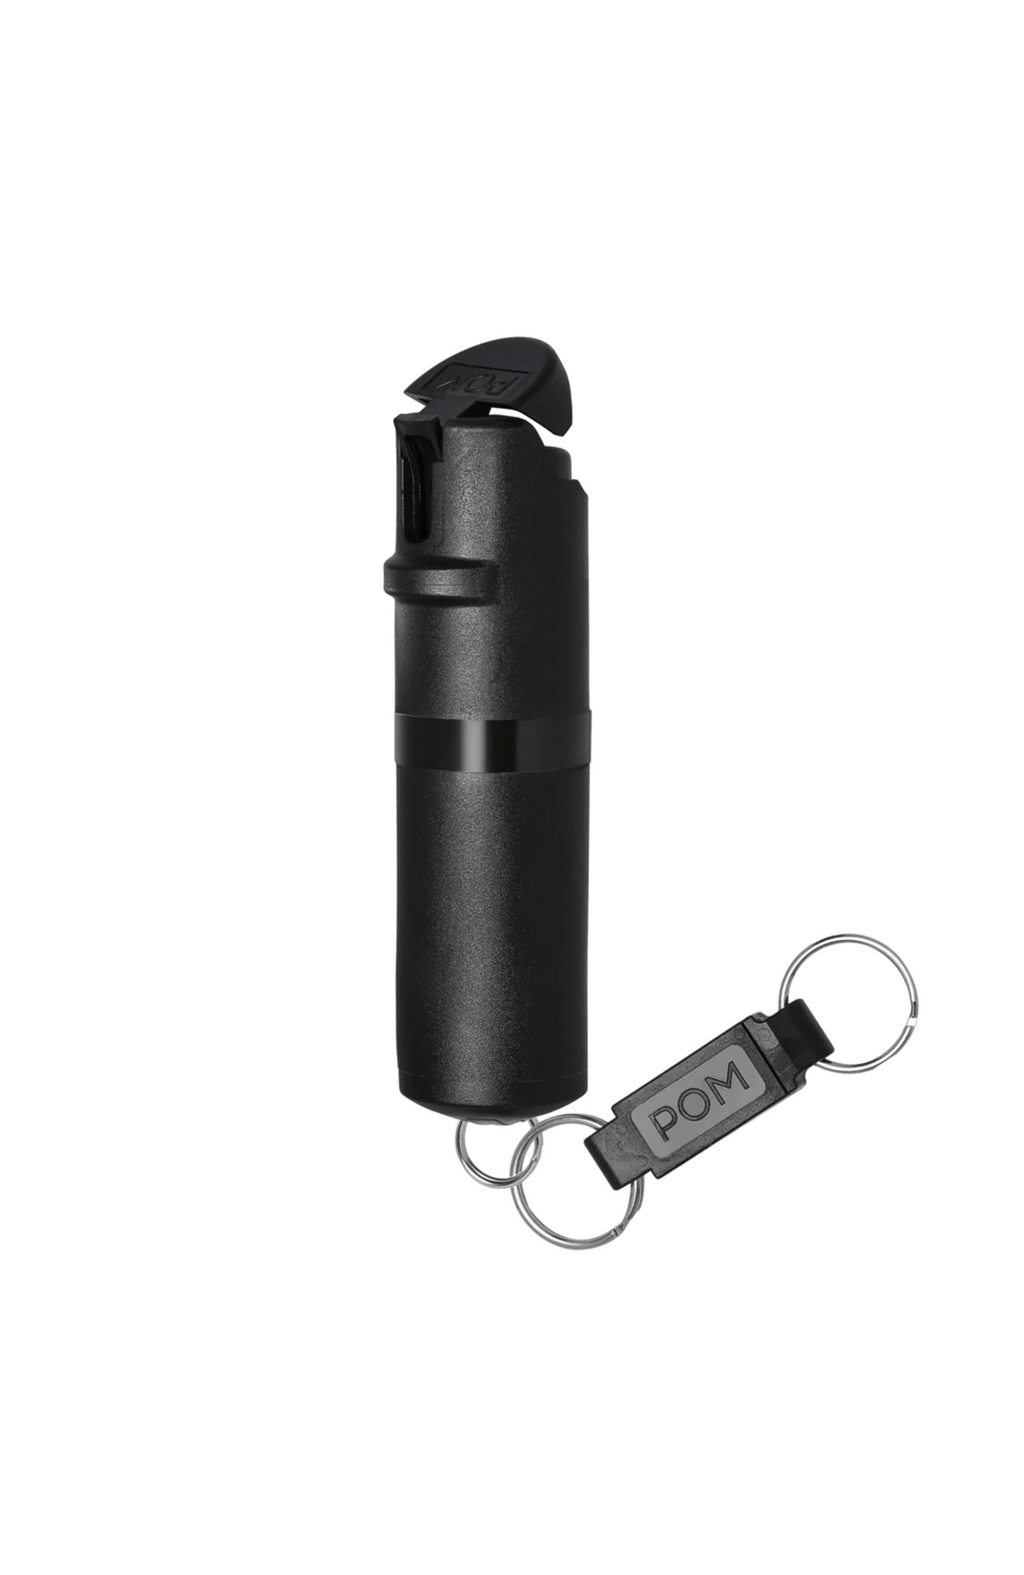 Pom - Next Generation Pepper Spray Keychain